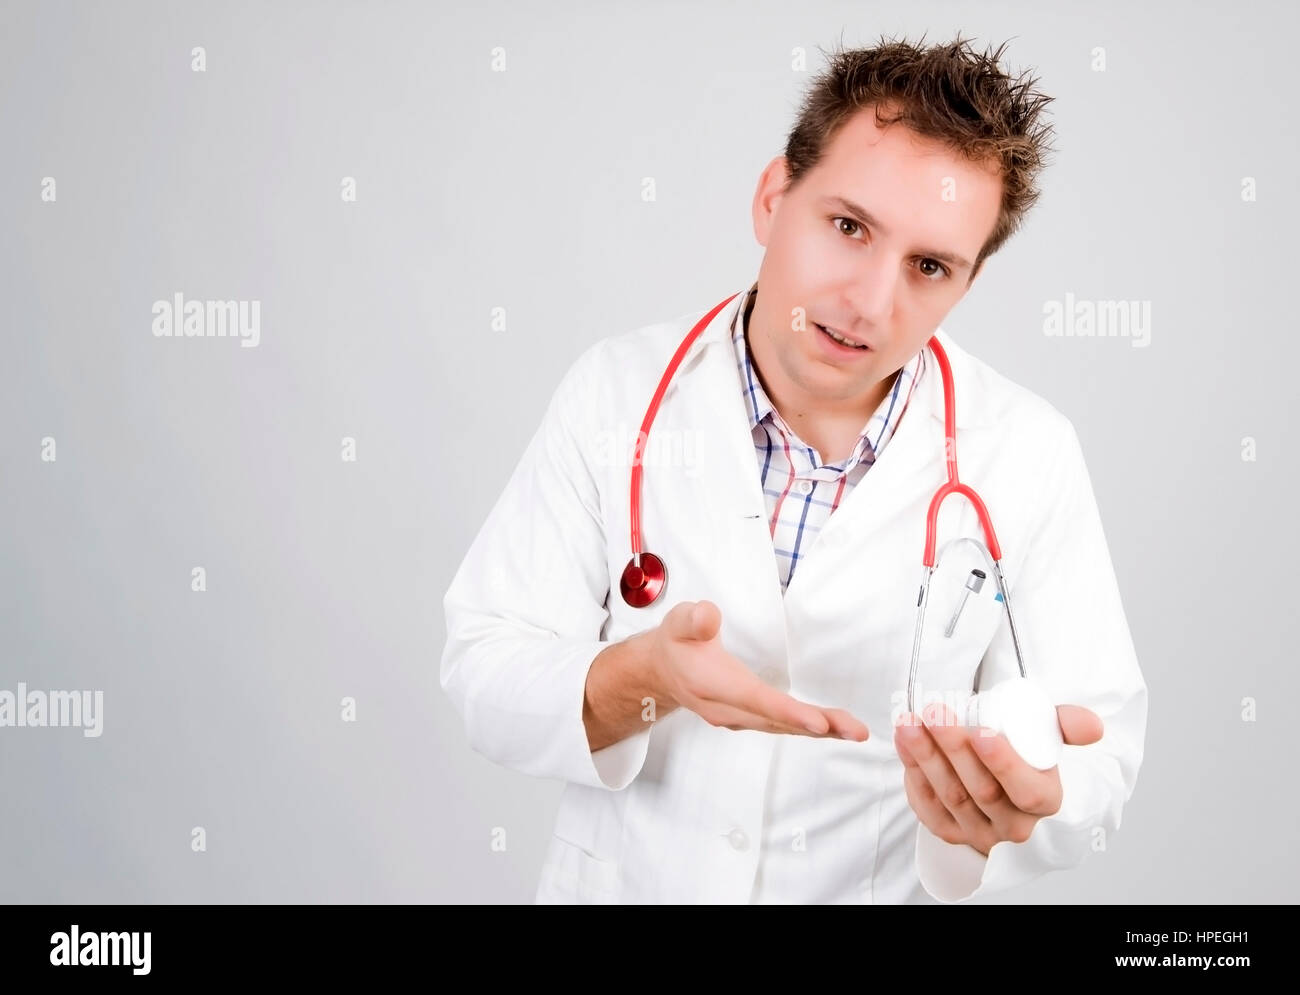 Model Release, Arzt Mit Medikament - Arzt mit Medizin Stockfoto